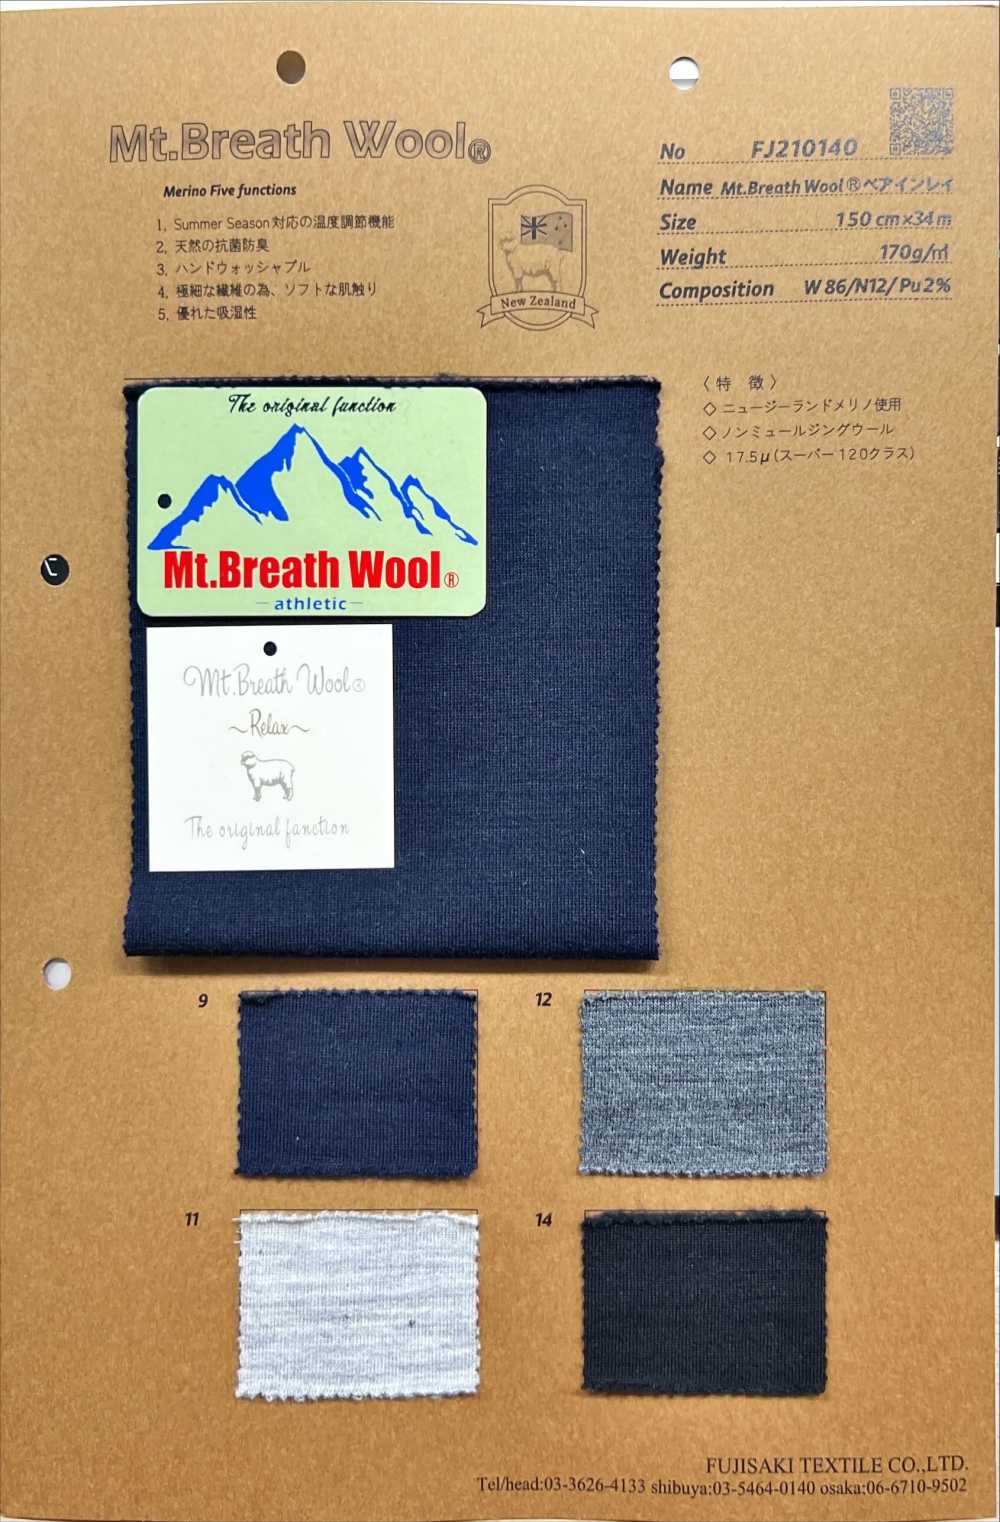 FJ210140 Mt.Breath 羊毛熊镶嵌[面料] Fujisaki Textile